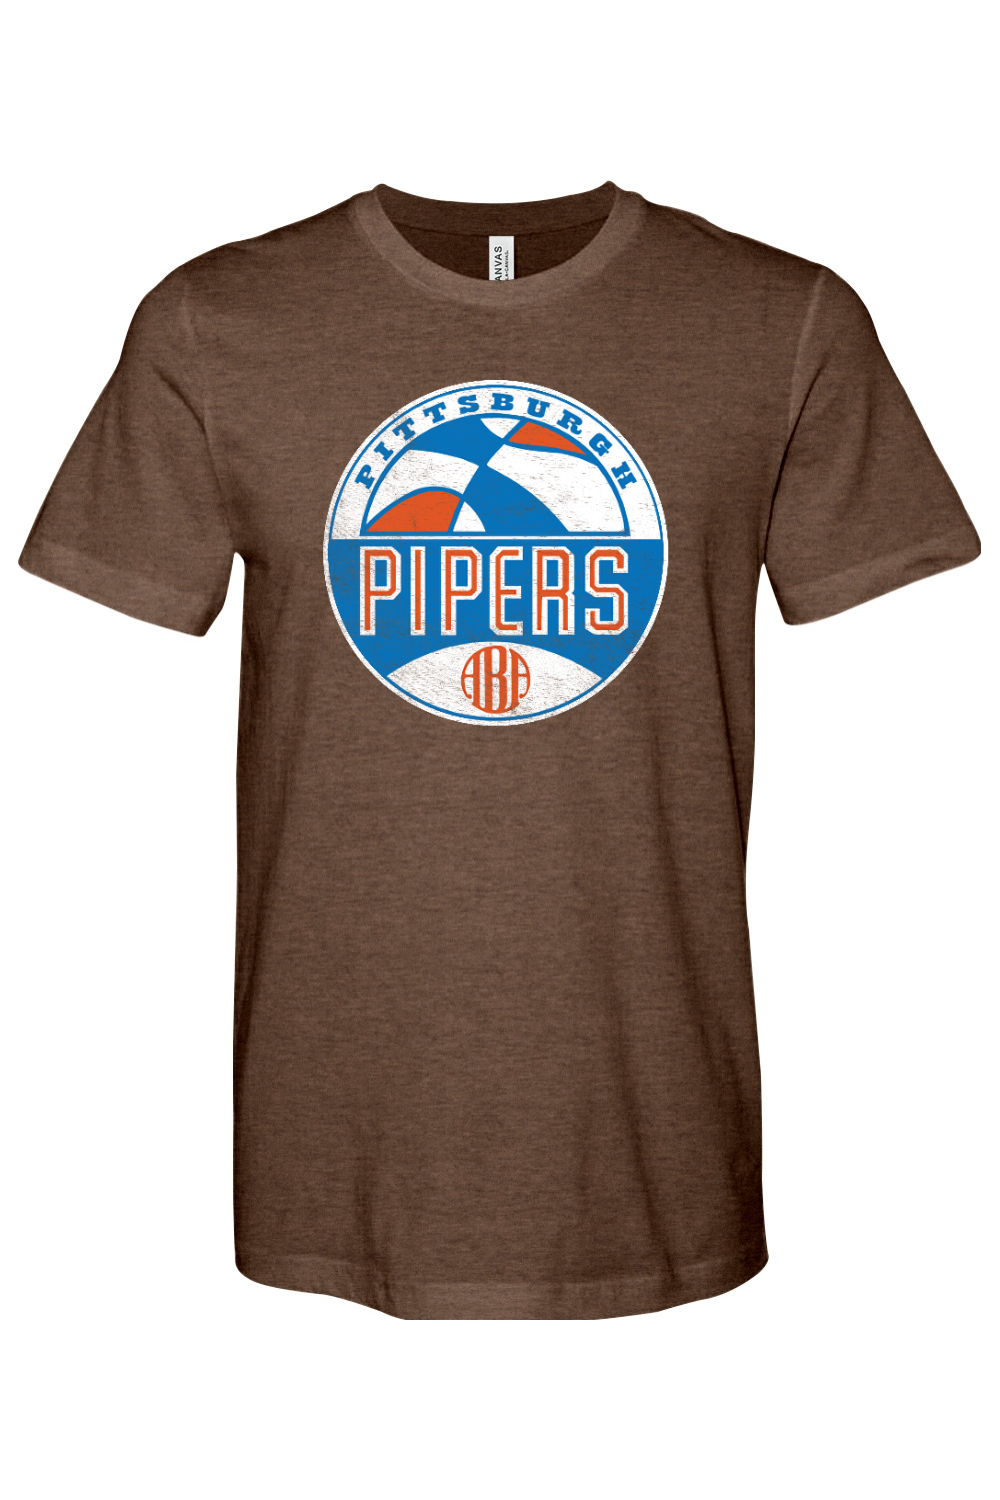 Pittsburgh Pipers Basketball (ABA) - Yinzylvania